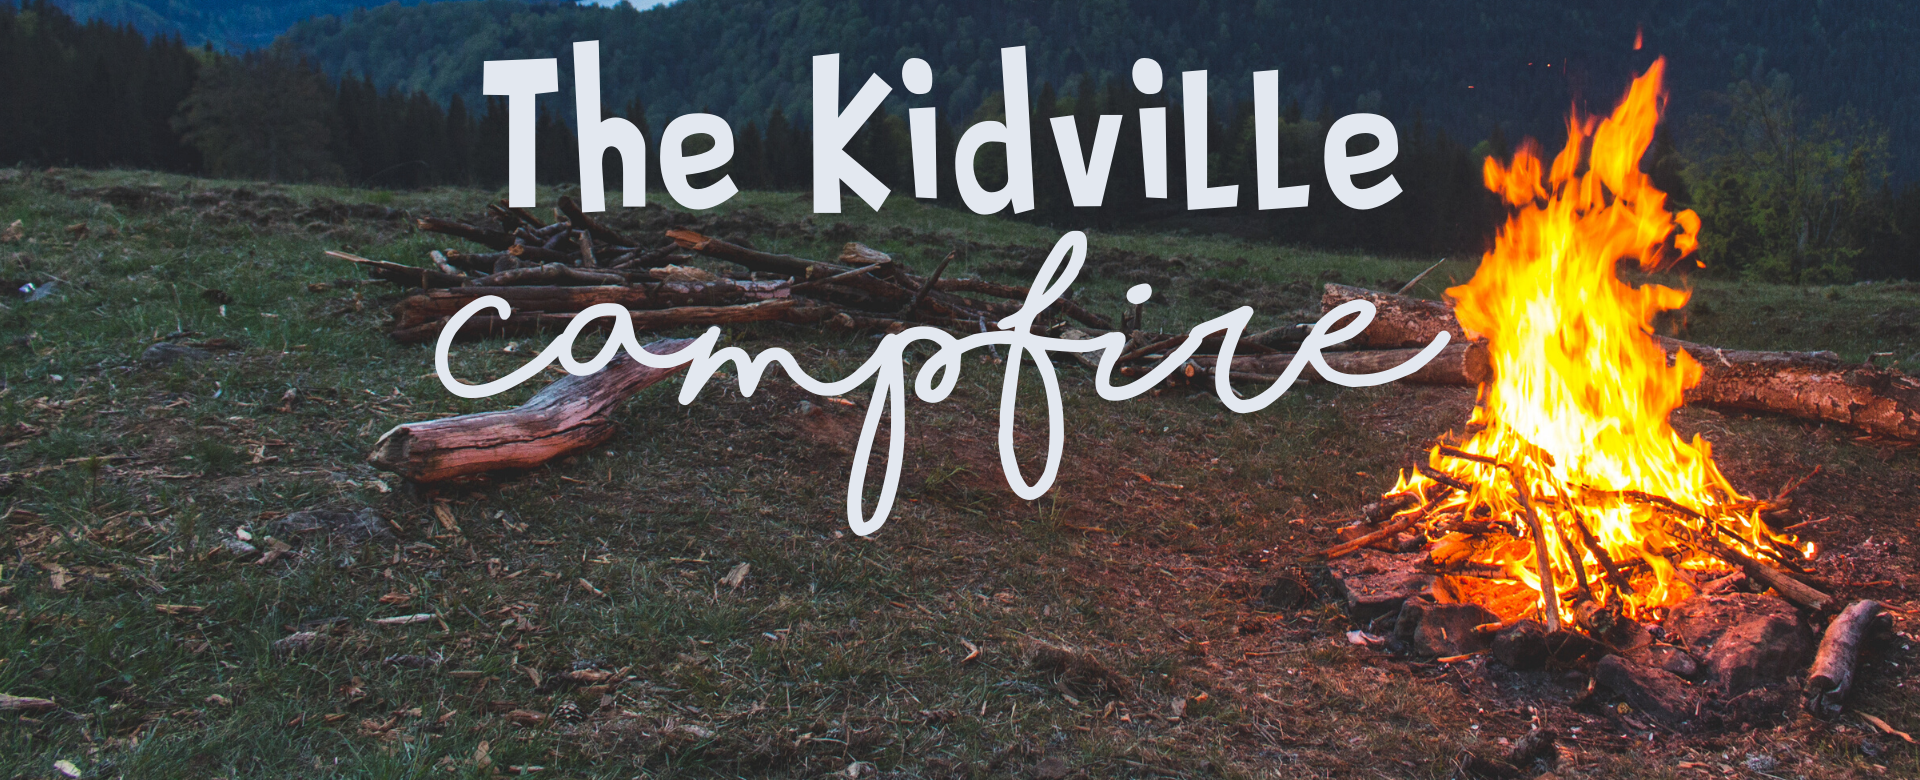 The Kidville Campfire (1)